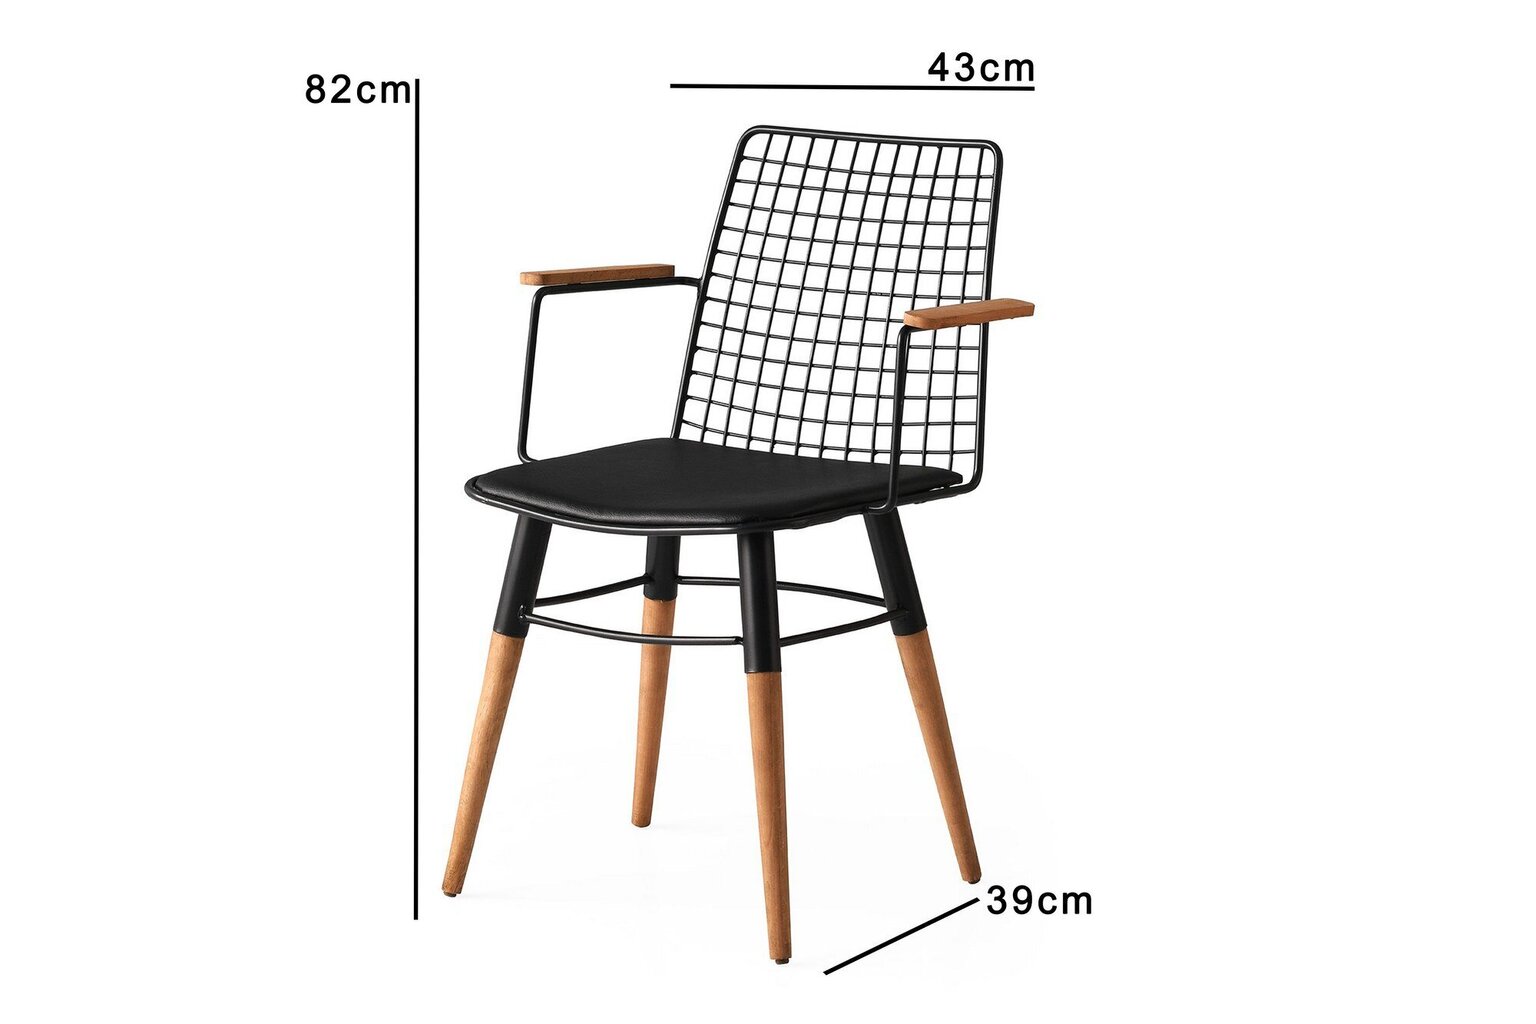 2 krēslu komplekts Kalune Design Trend 270, melns/brūns цена и информация | Virtuves un ēdamistabas krēsli | 220.lv